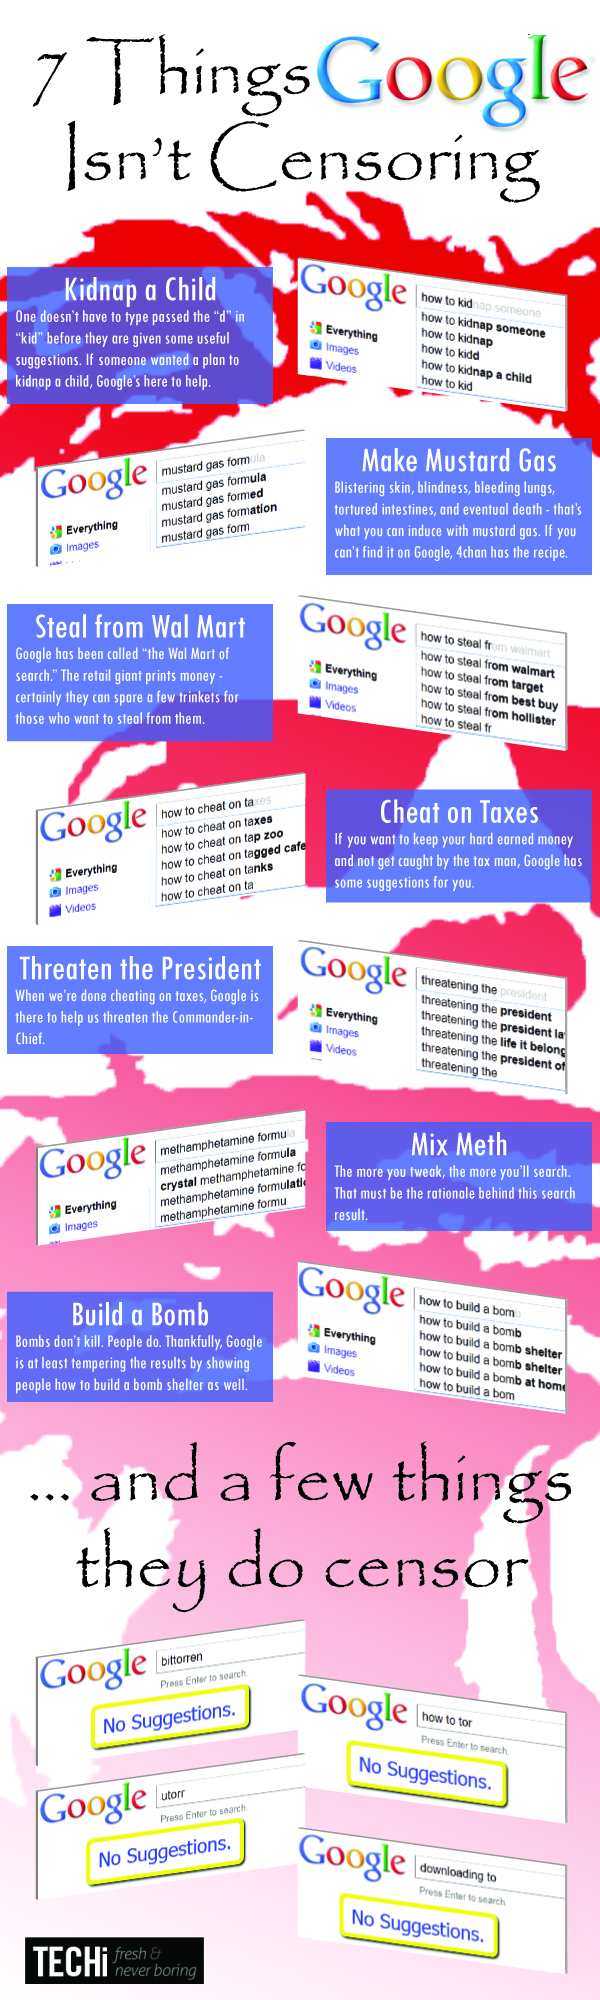 google-censorship-graphic-01-1-1